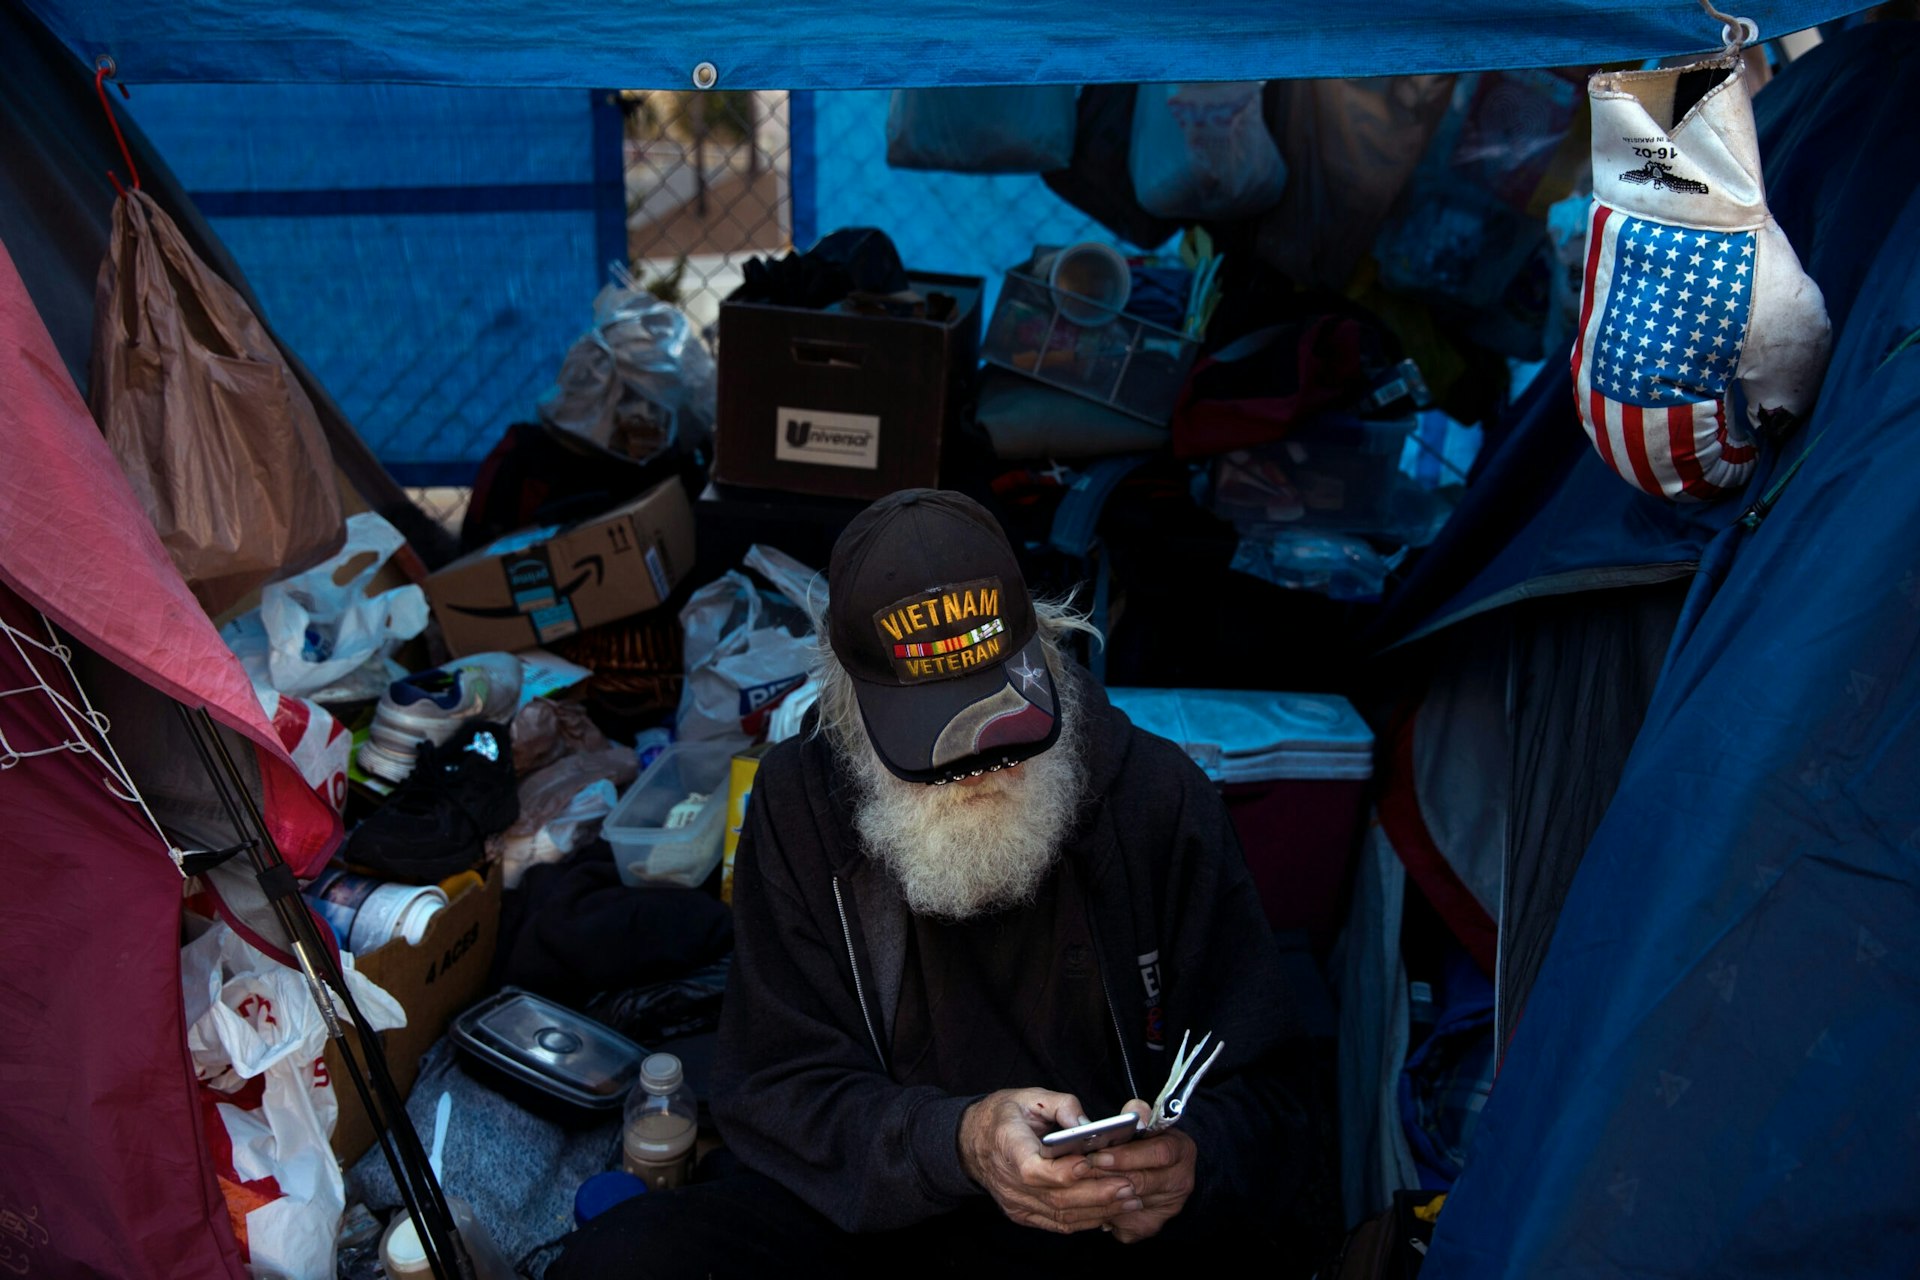 An elderly man, wearing a Vietnam veteran hat, looks at his cell phone in a homeless encampment.